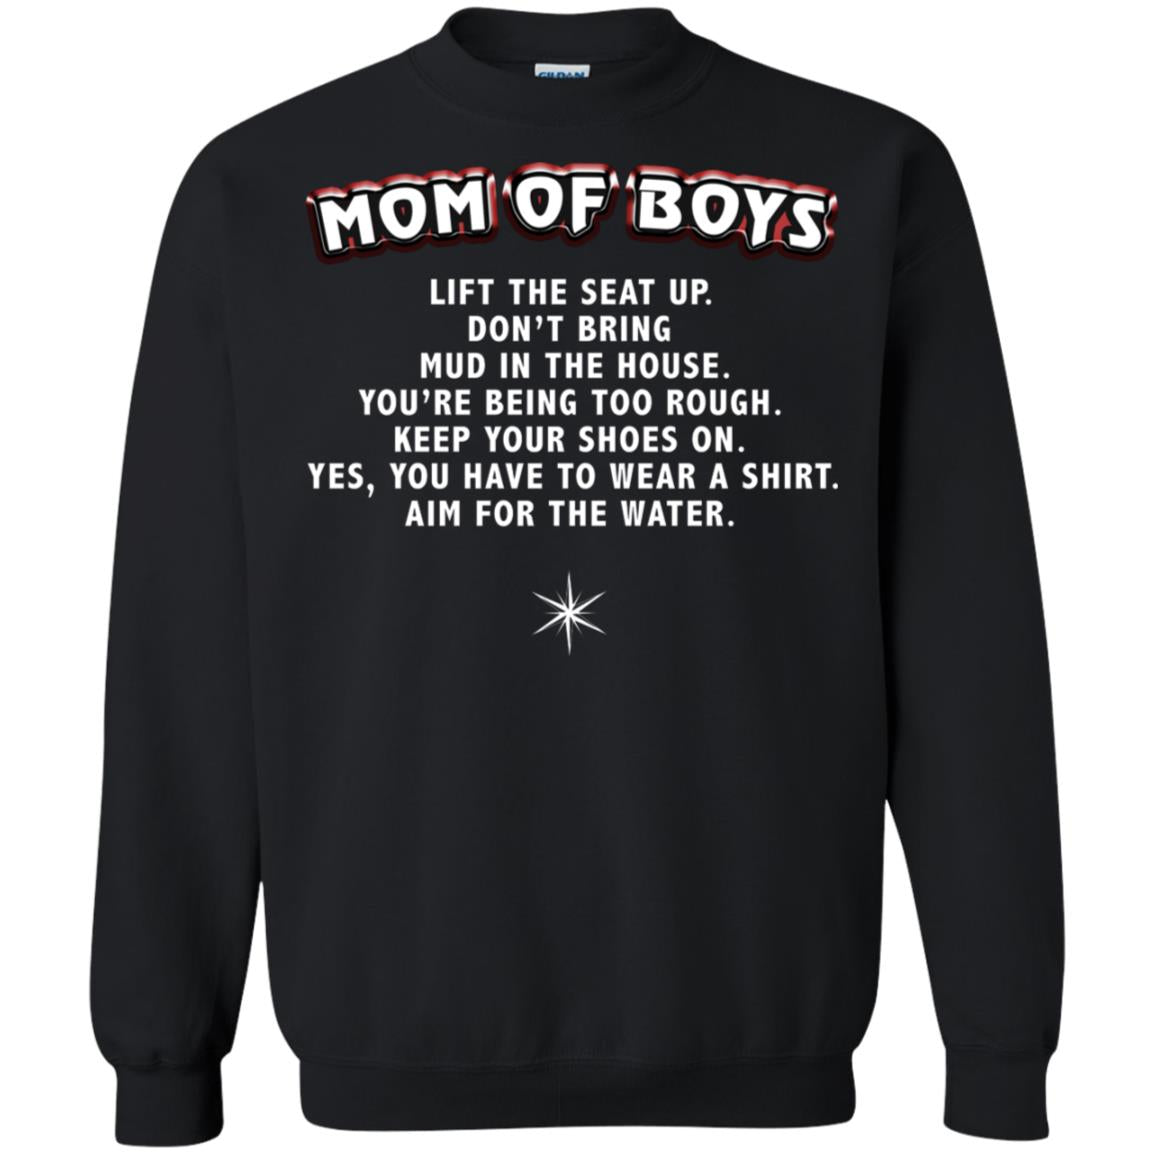 Mom Of Boys You Have To Wear A Shirt Aim For The Water Shirt G180 Gildan Crewneck Pullover Sweatshirt  8 Oz.